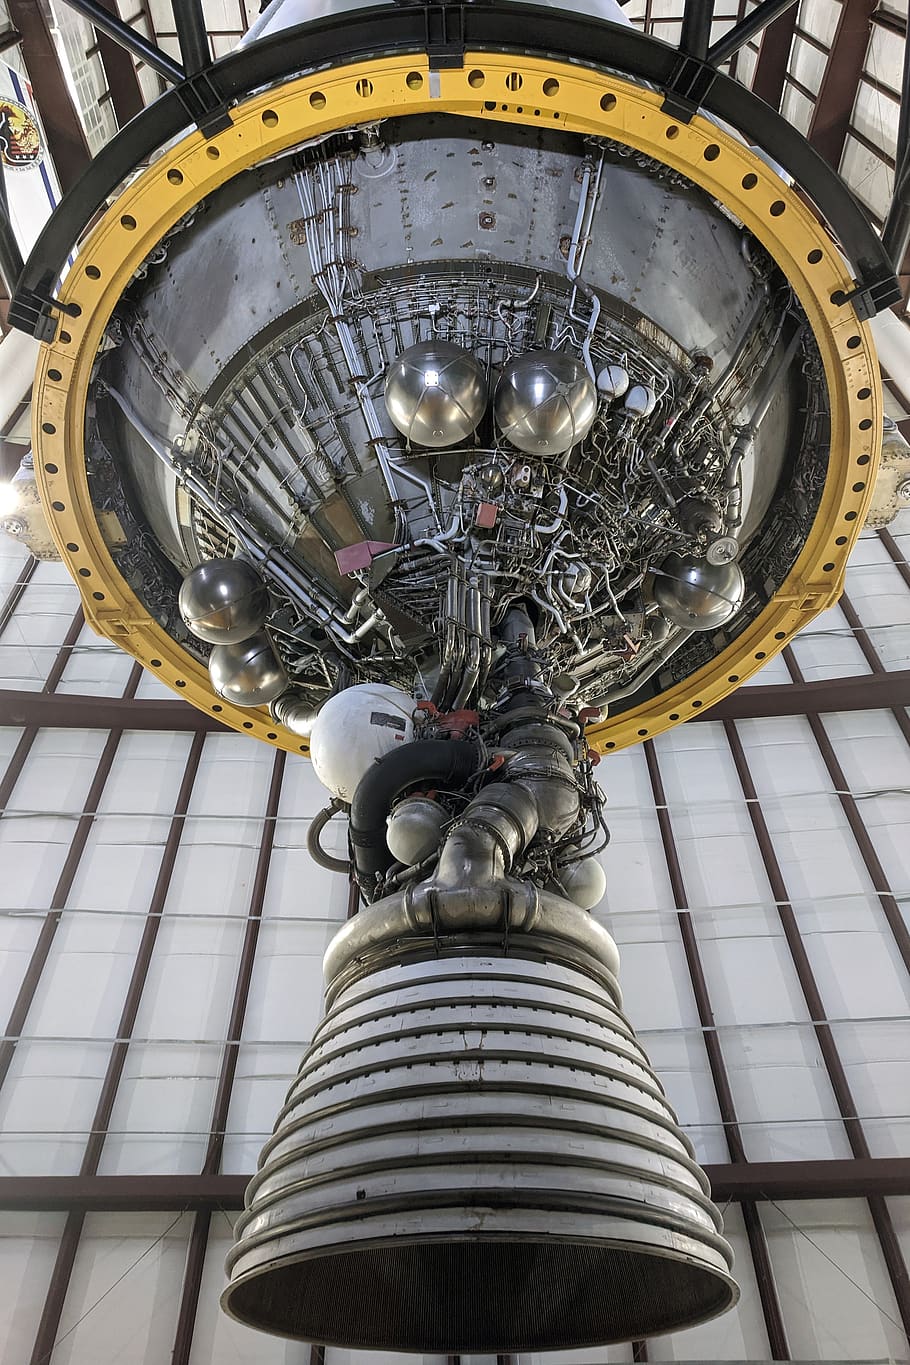 nasa, rocket, saturn v, third stage, j-2, engine, thruster, nozzle, spaceship, nozzles